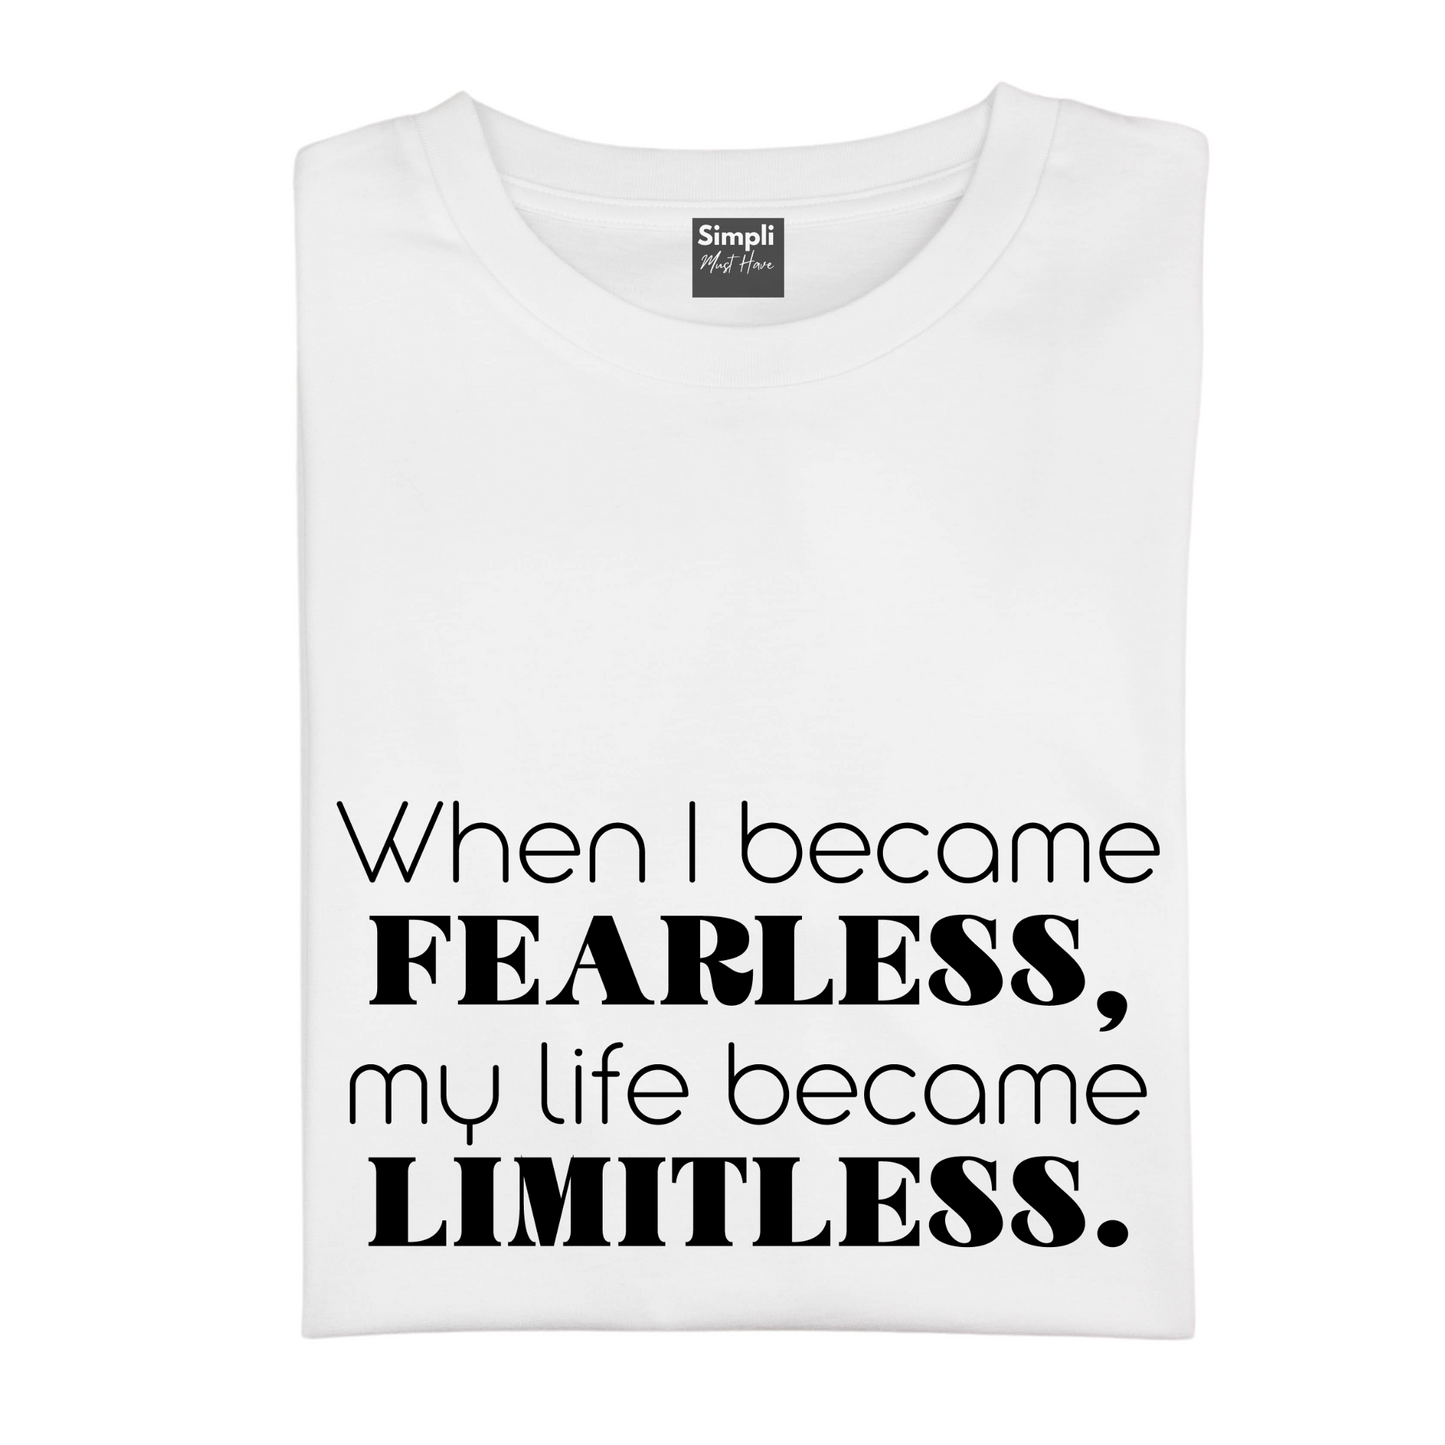 Fearless Limitless Tshirt